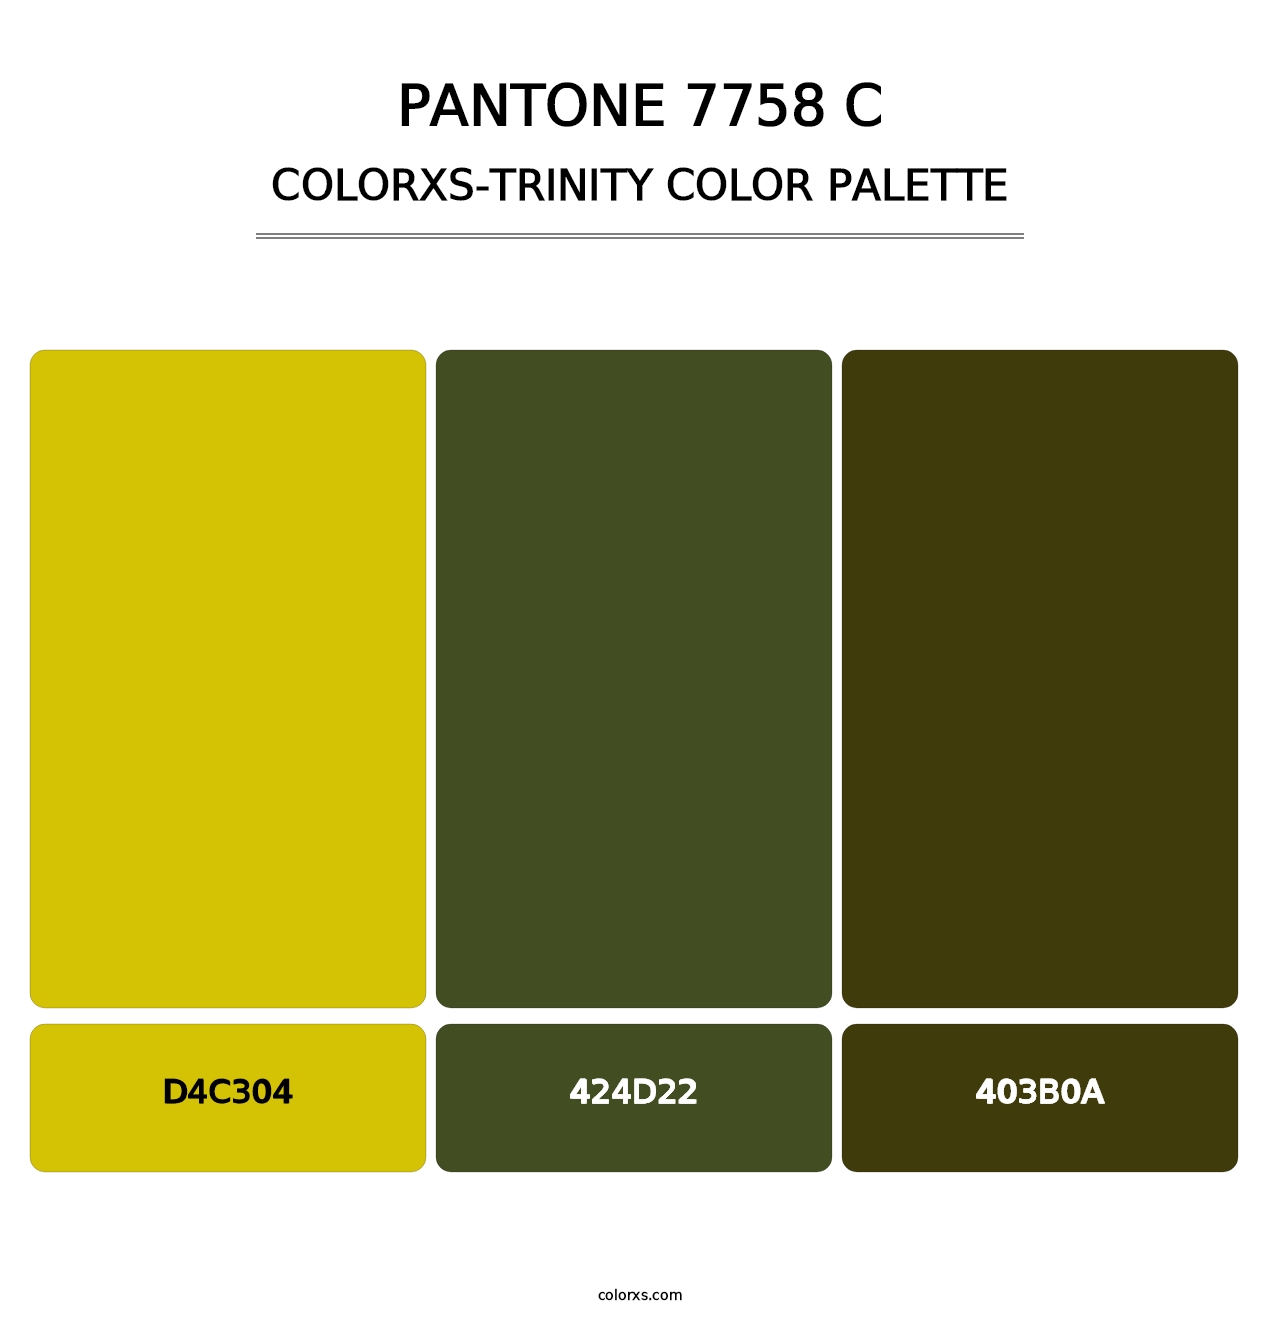 PANTONE 7758 C - Colorxs Trinity Palette